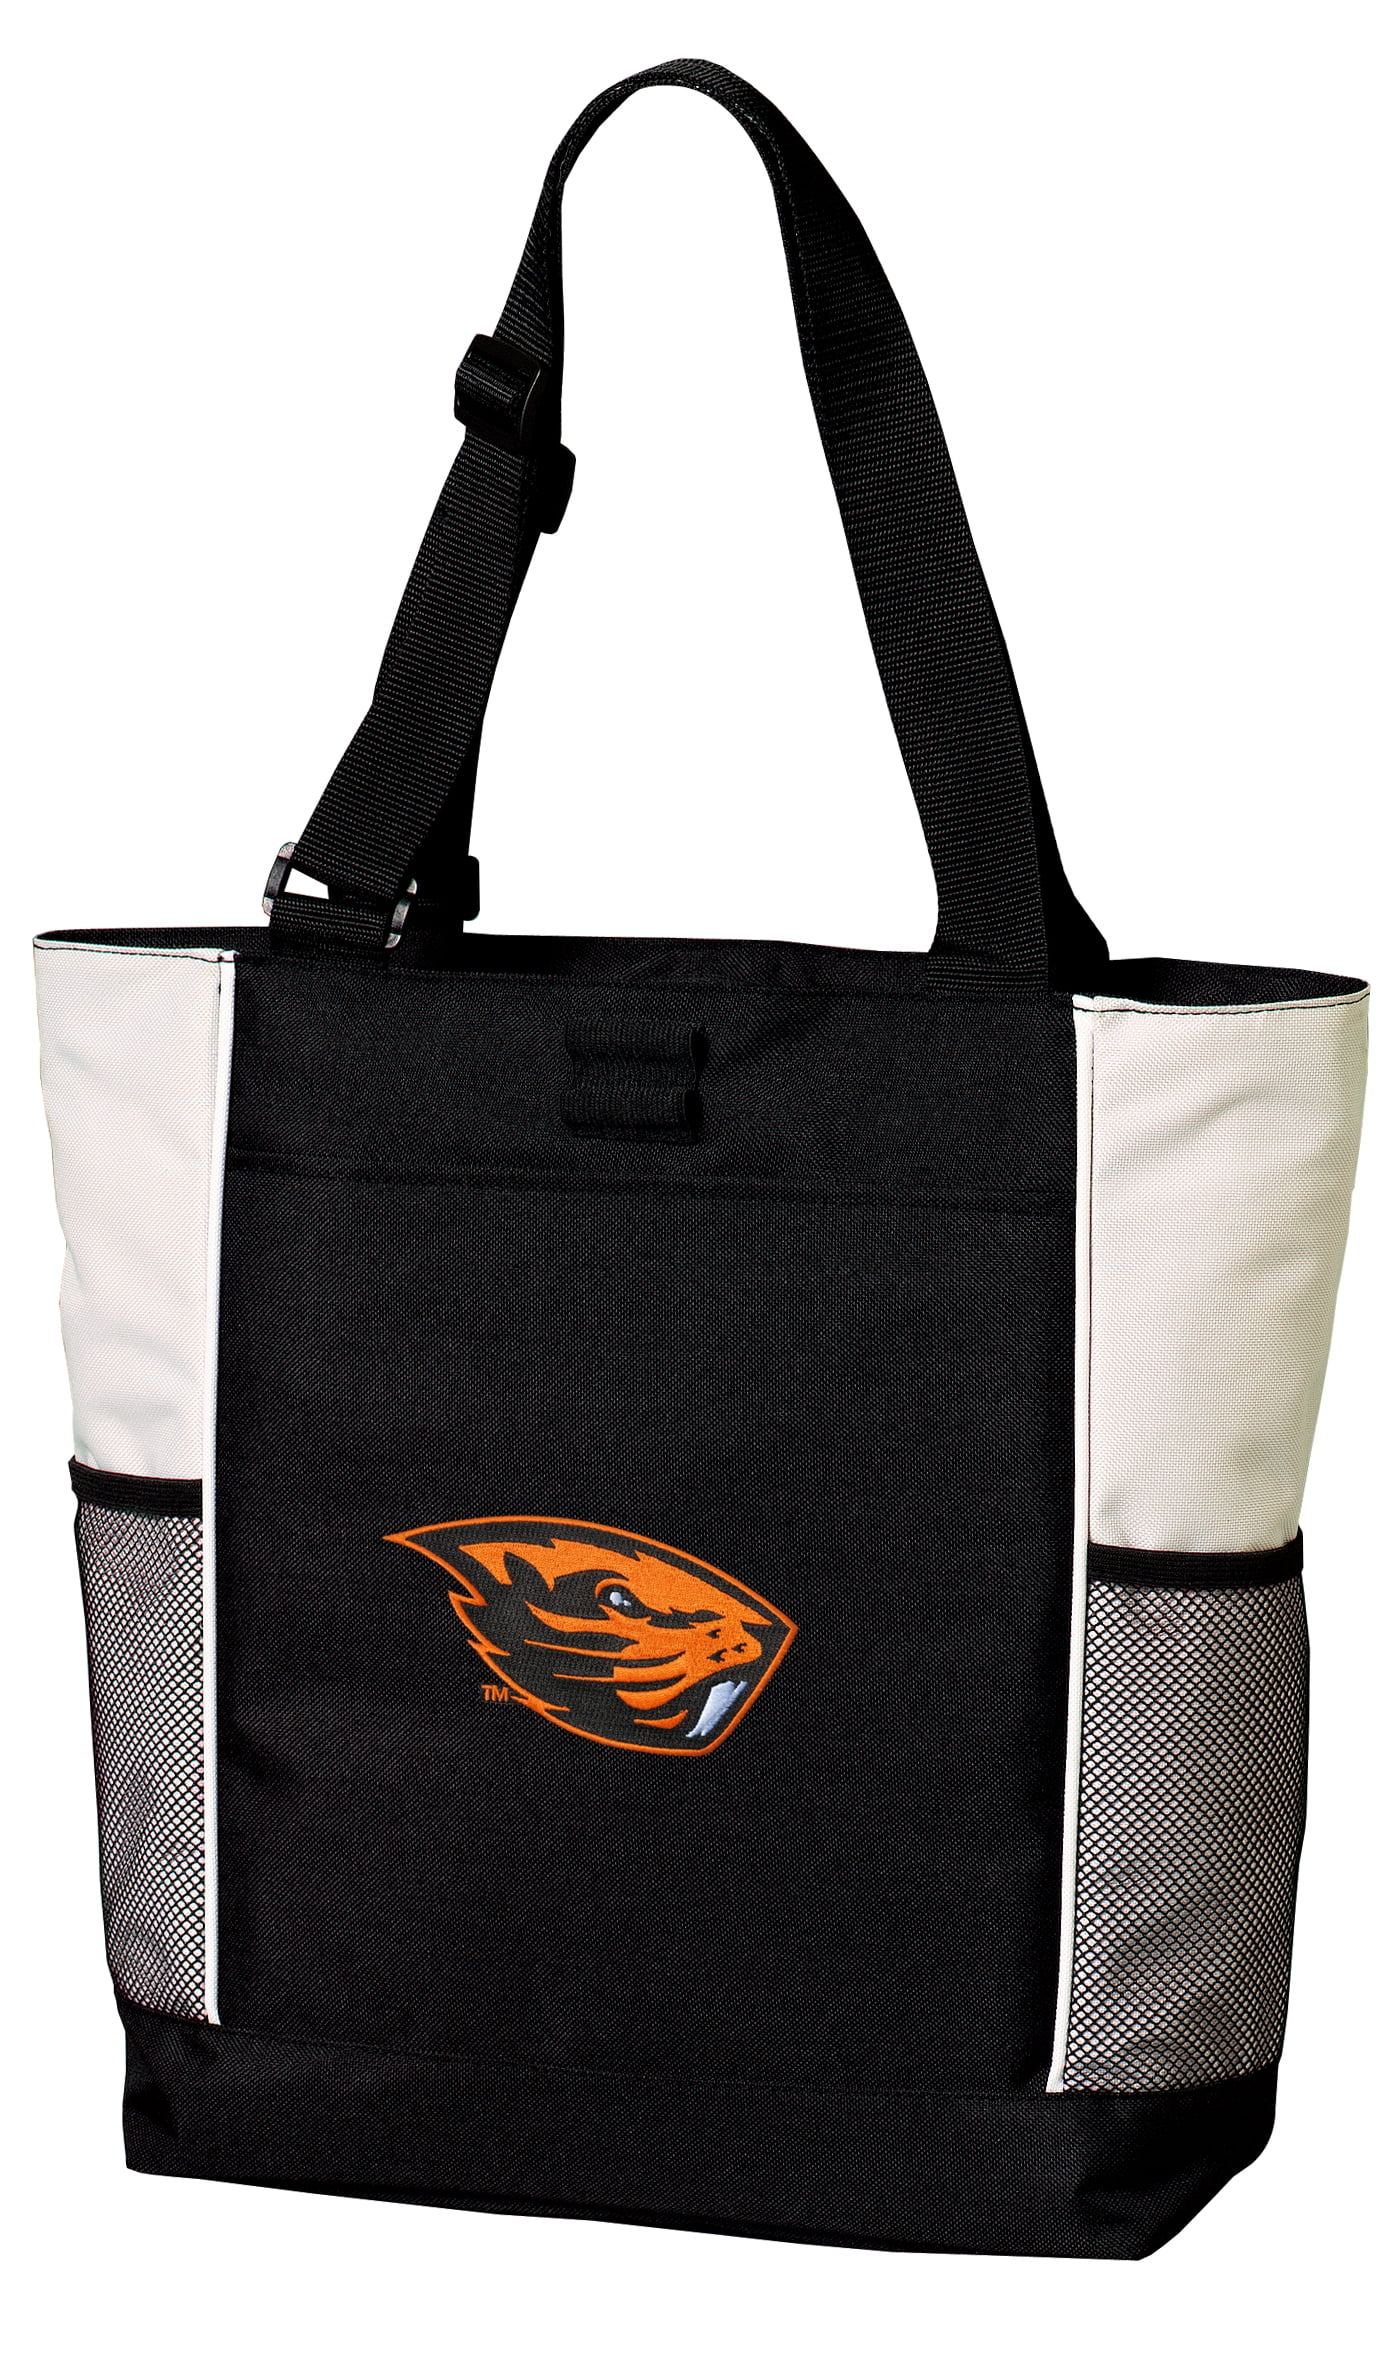 Broad Bay Large OSU Beavers Duffel Bag CAMO Oregon State University Suitcase Duffle Luggage Gift Idea for Men Man Him! 